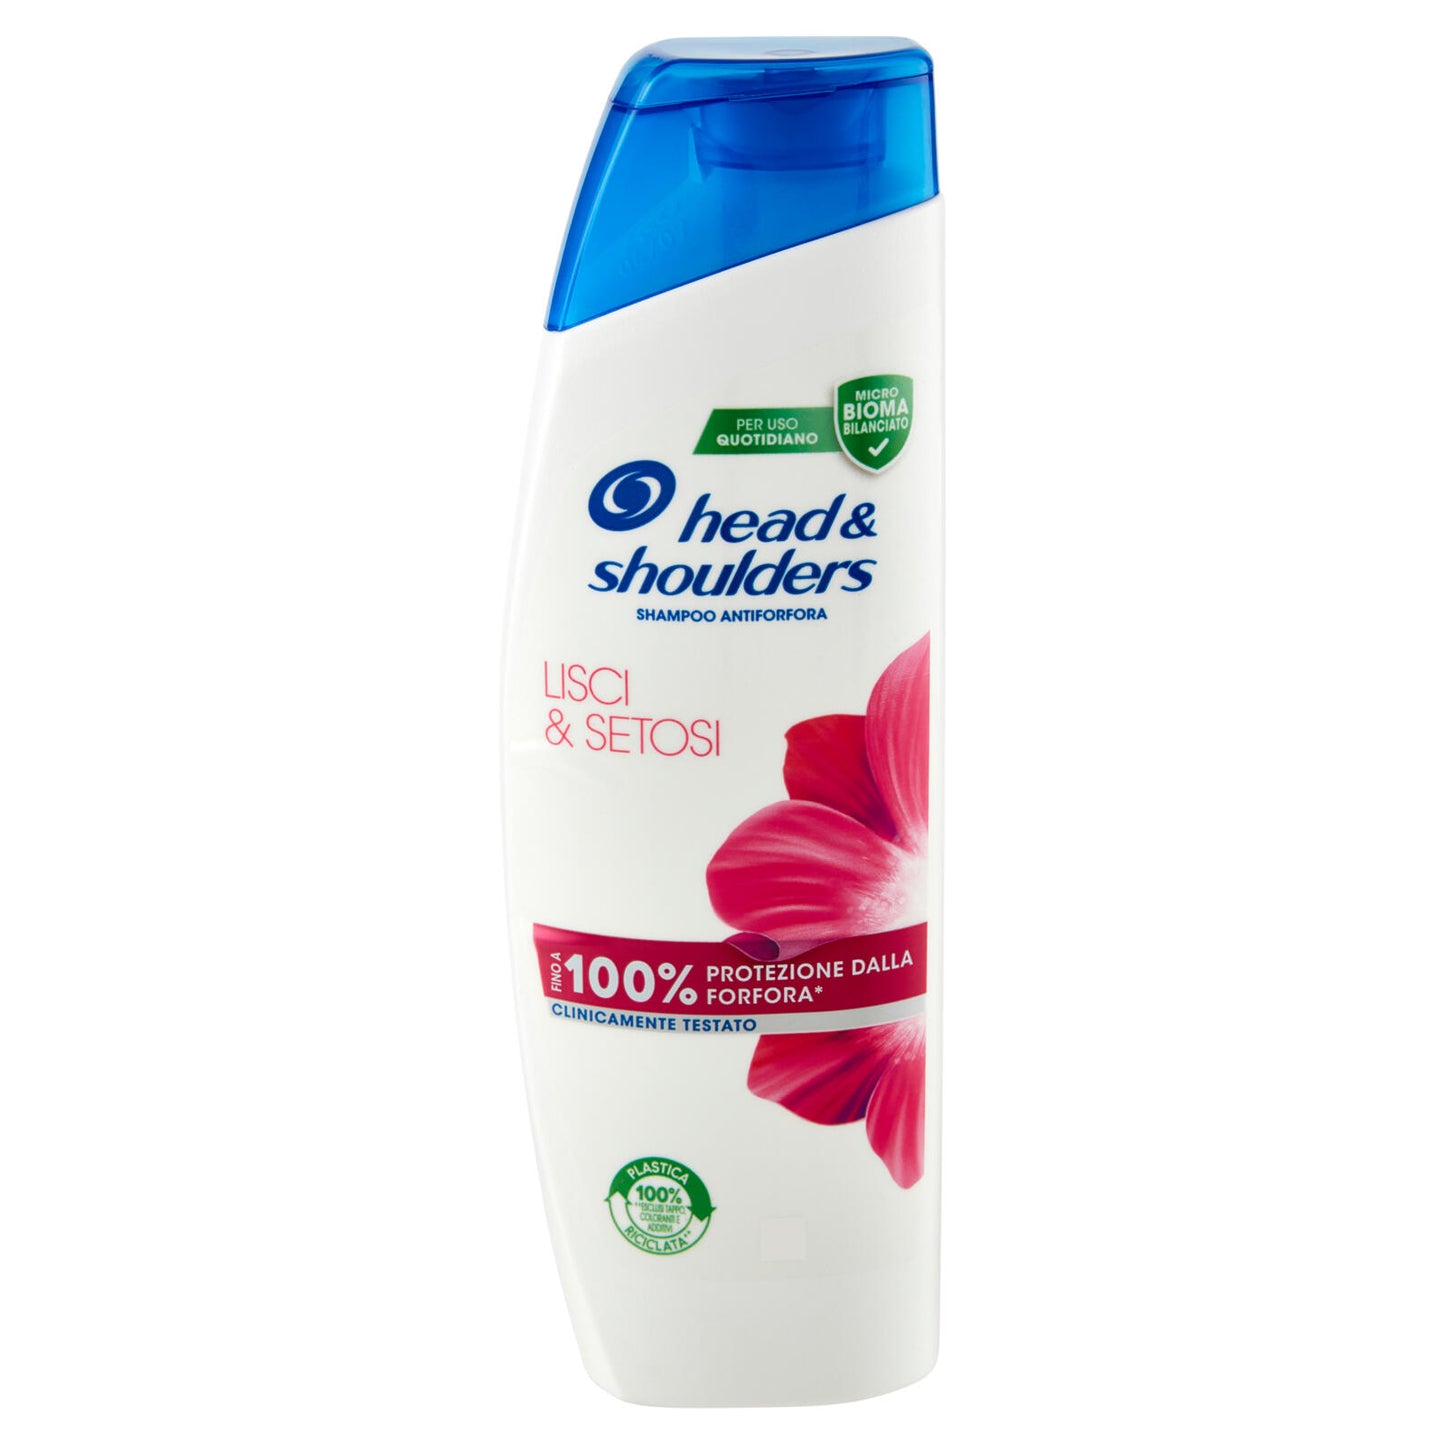 Head & Shoulders Shampoo Antiforfora Lisci & Setosi 225 ml